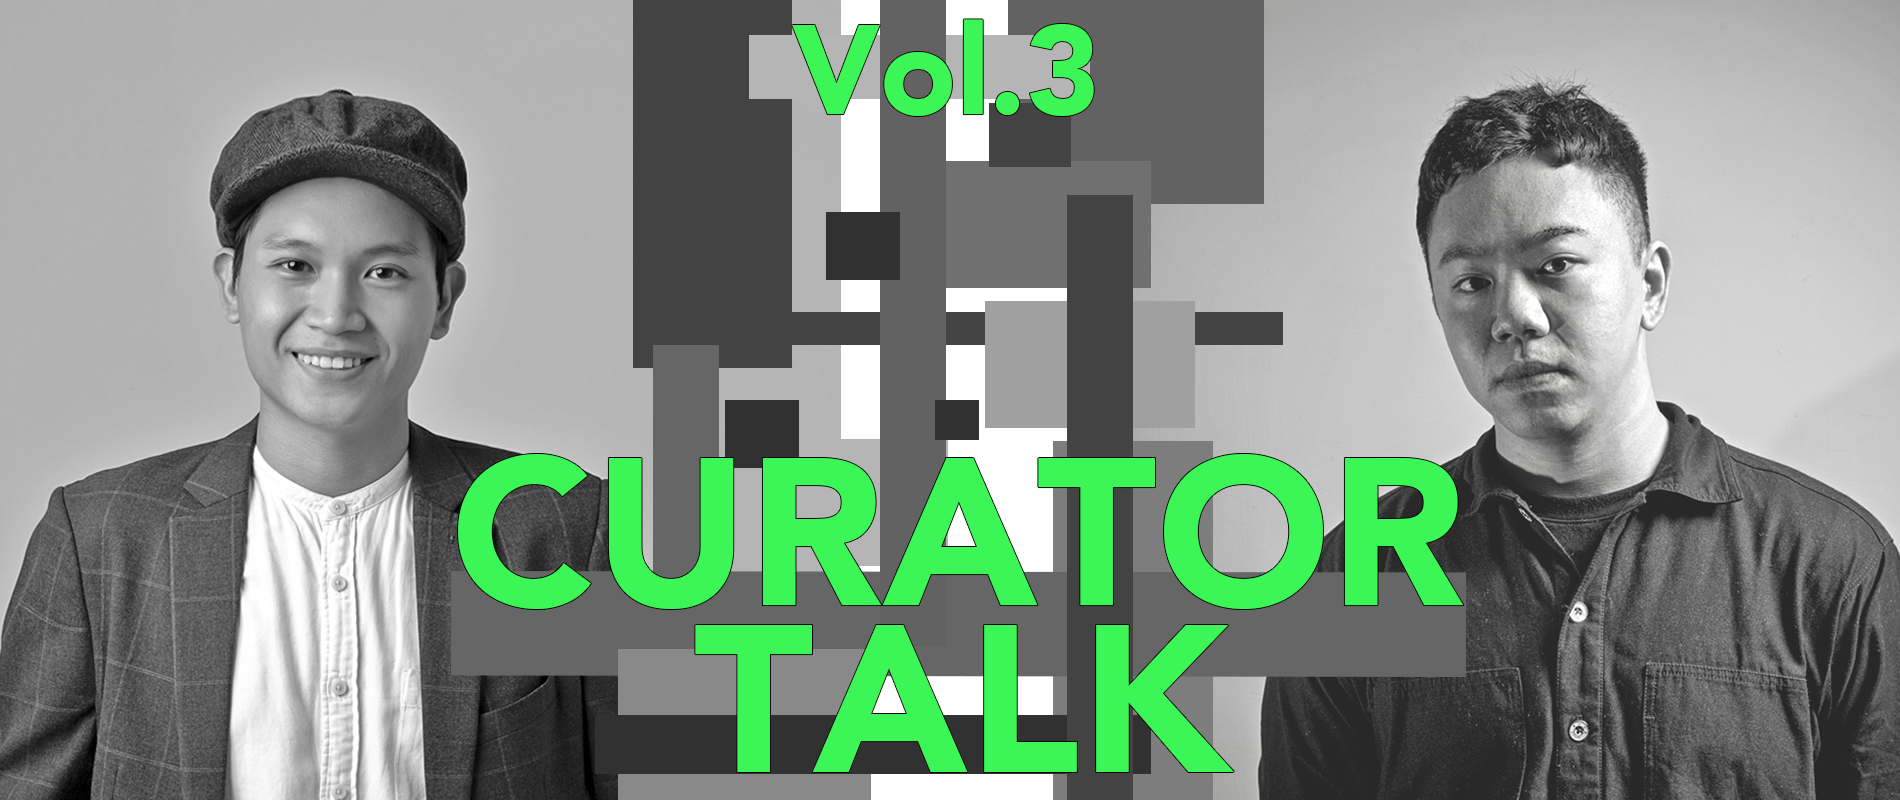 Curator Talk Vol. 3